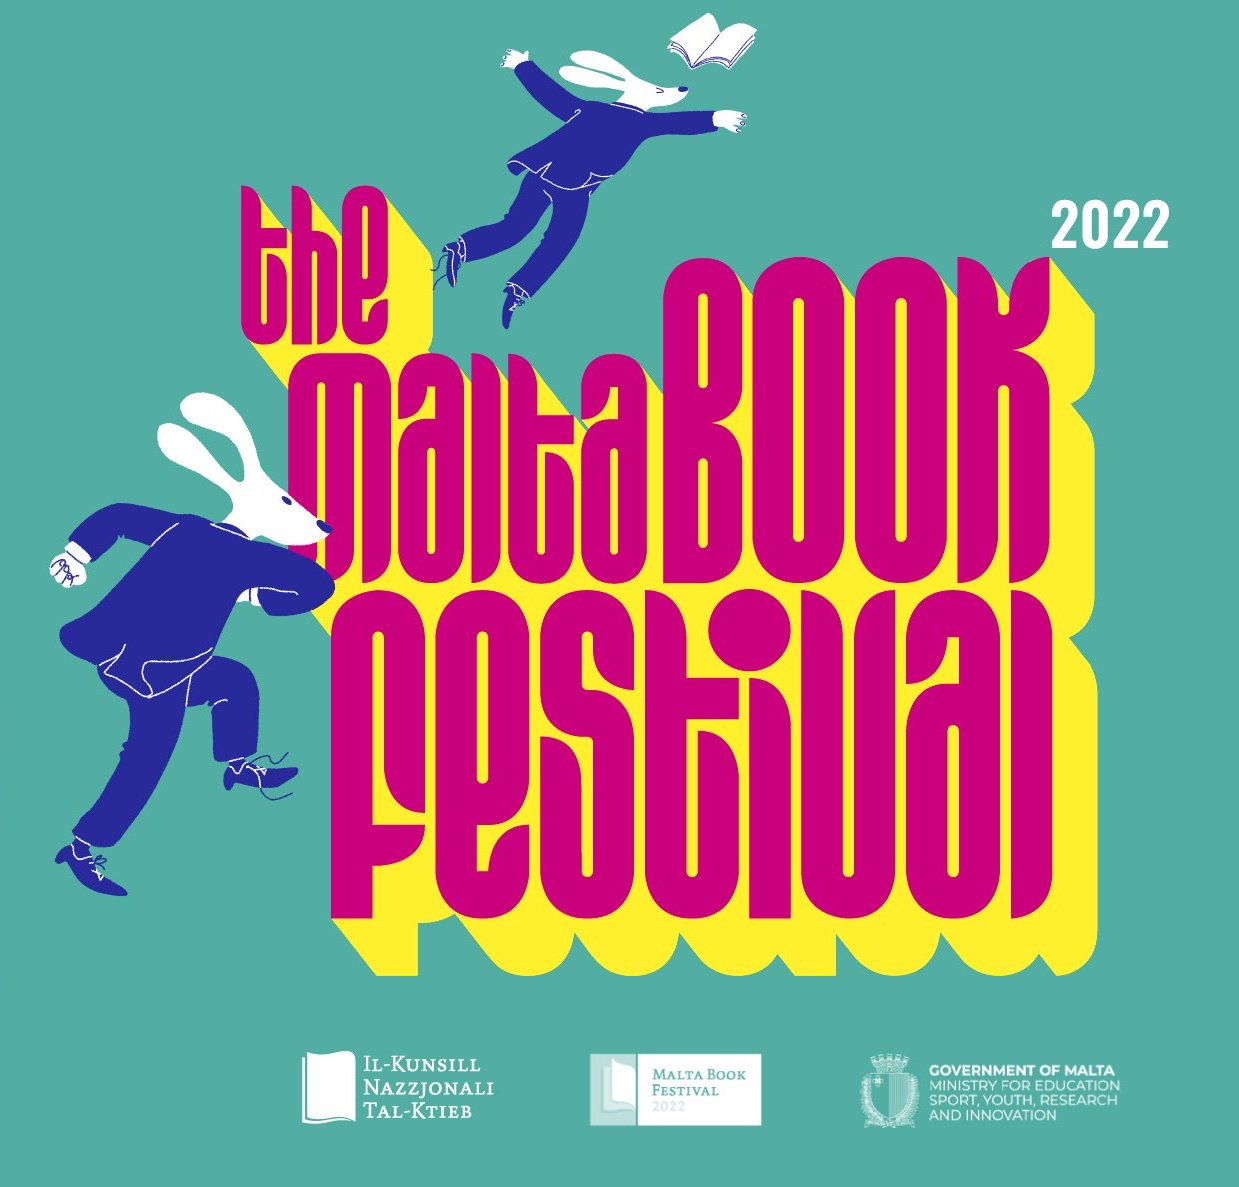 Malta Book Festival 2022 logo